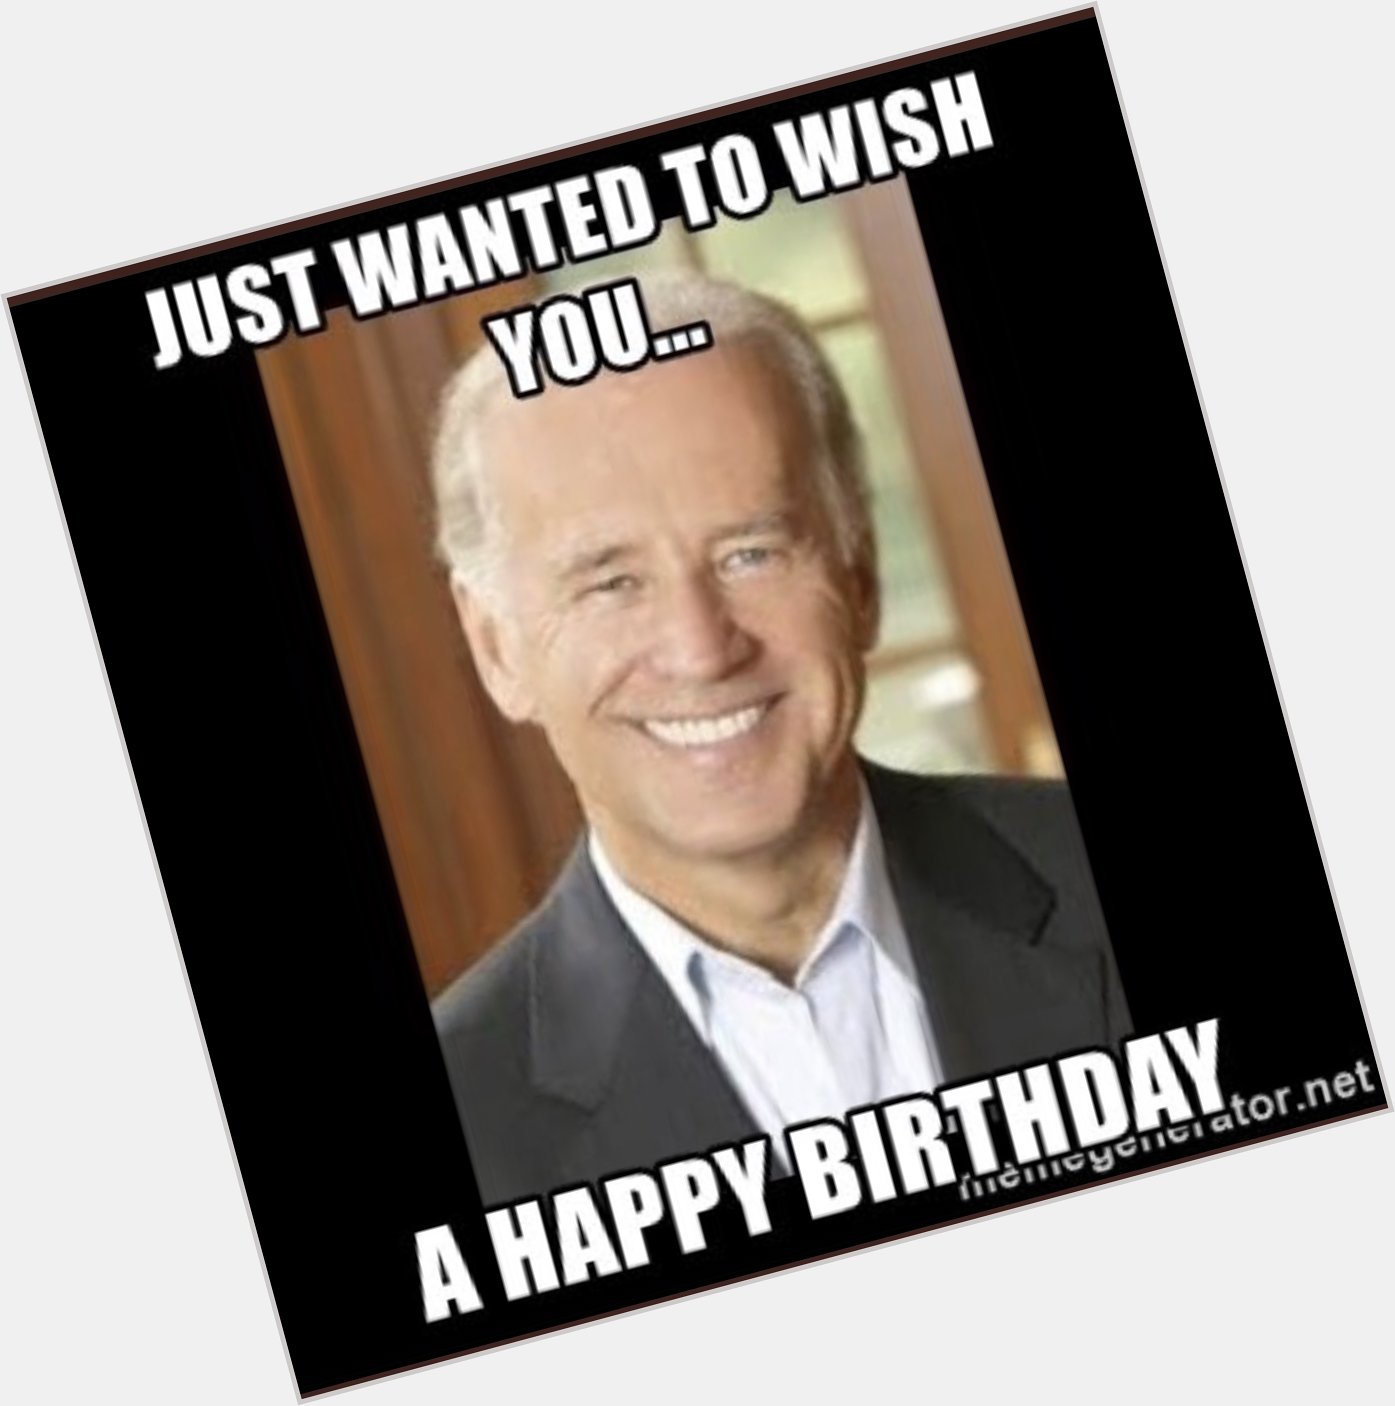 Happy Birthday to Joe Biden on November 20th. 